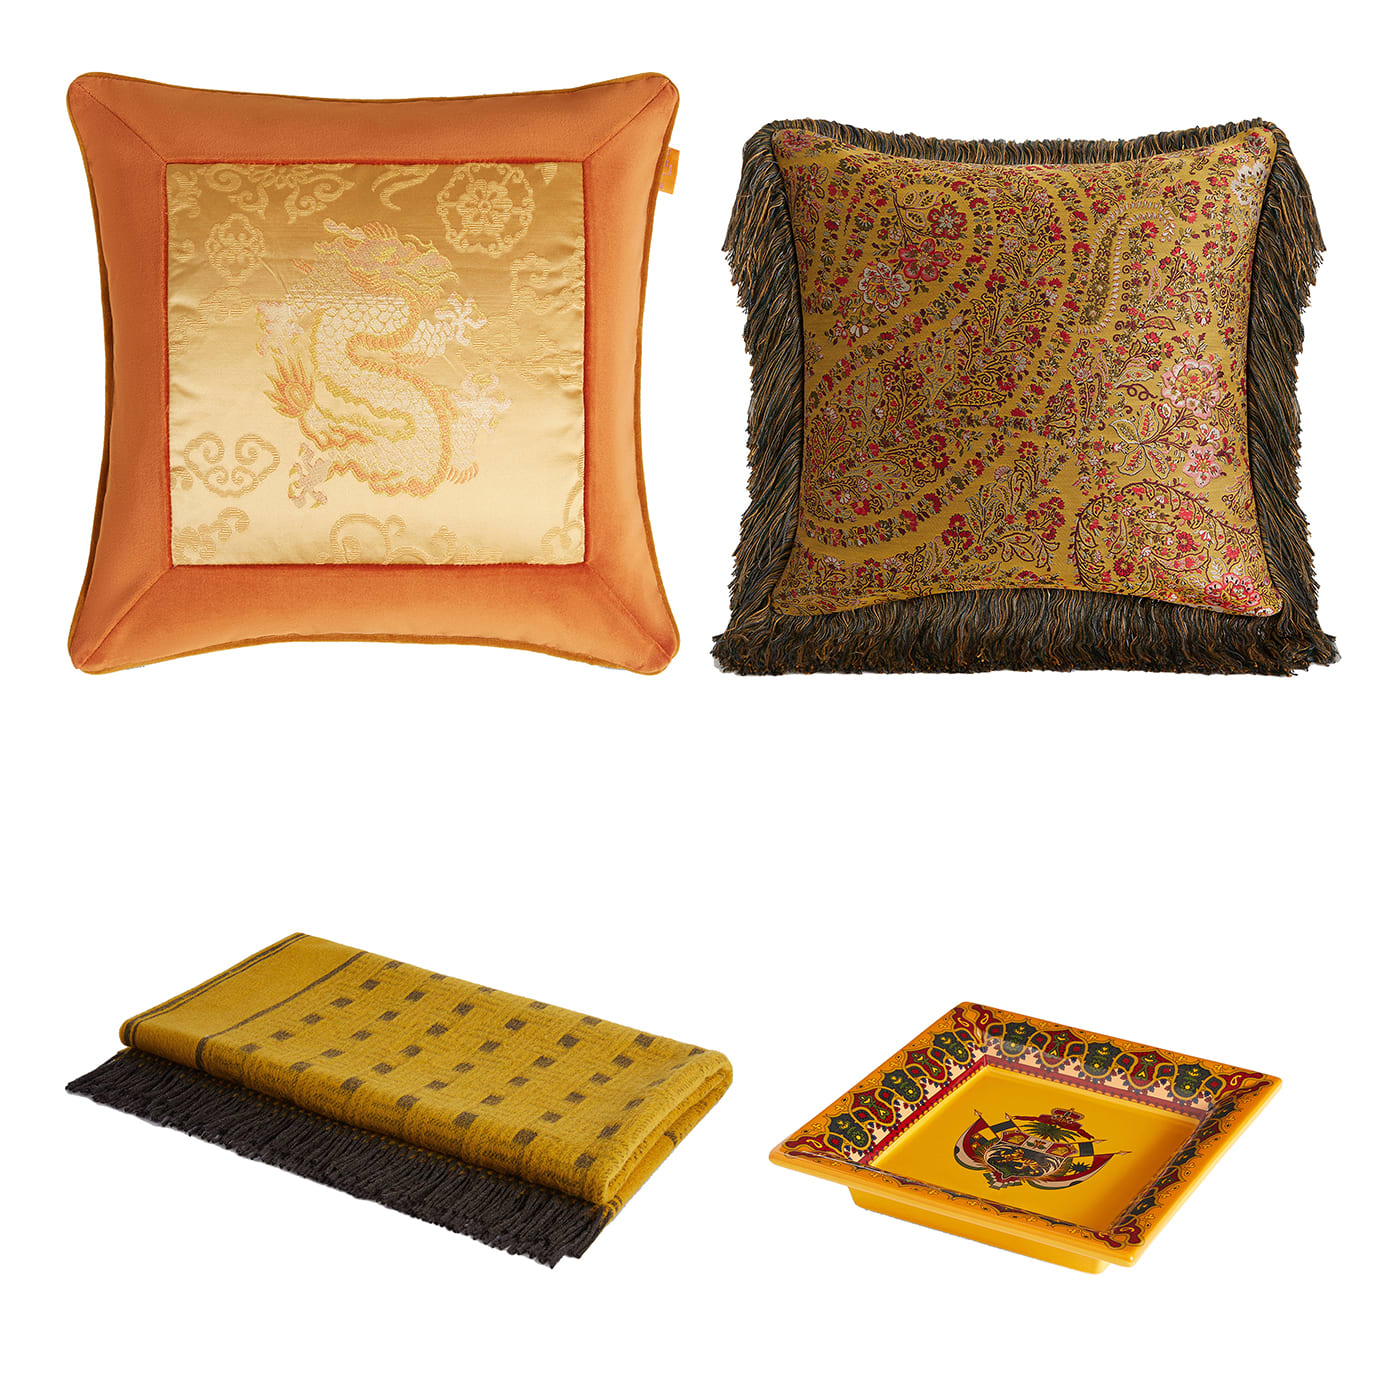 Set of 1 Taizhou Cushions and 1 Timandra Cushion with 1 Eresma Blanket and 1 Maharaja Vide-Poche - ETRO Home Accessory